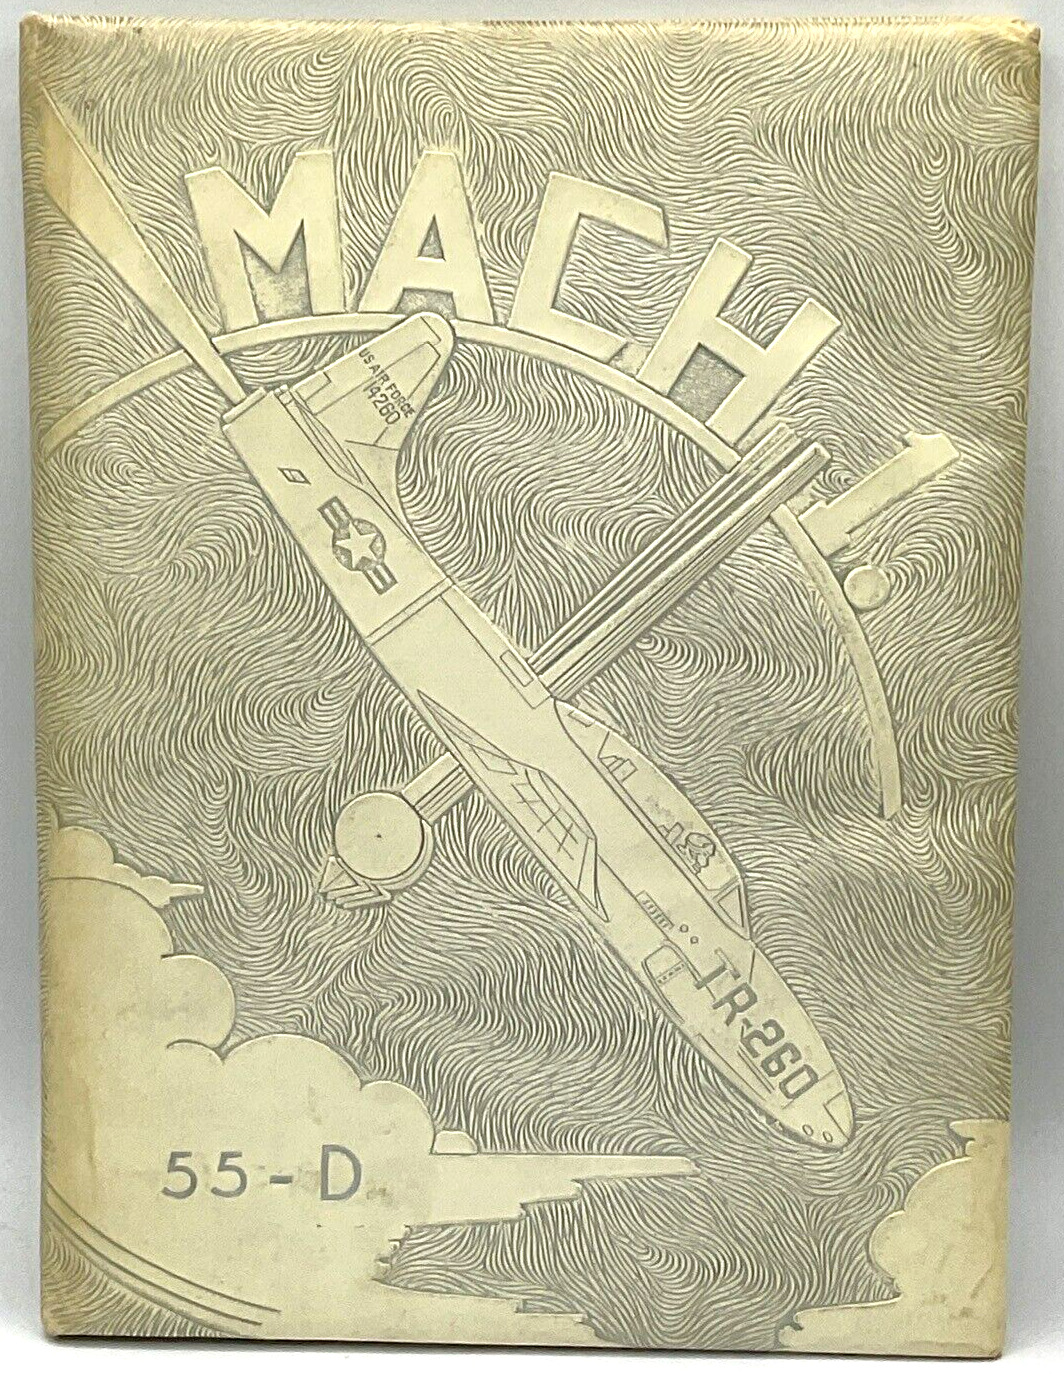 55-D Mach 1 Pilot Flight School Yearbook Webb AFB Texas Curtis A Preston History